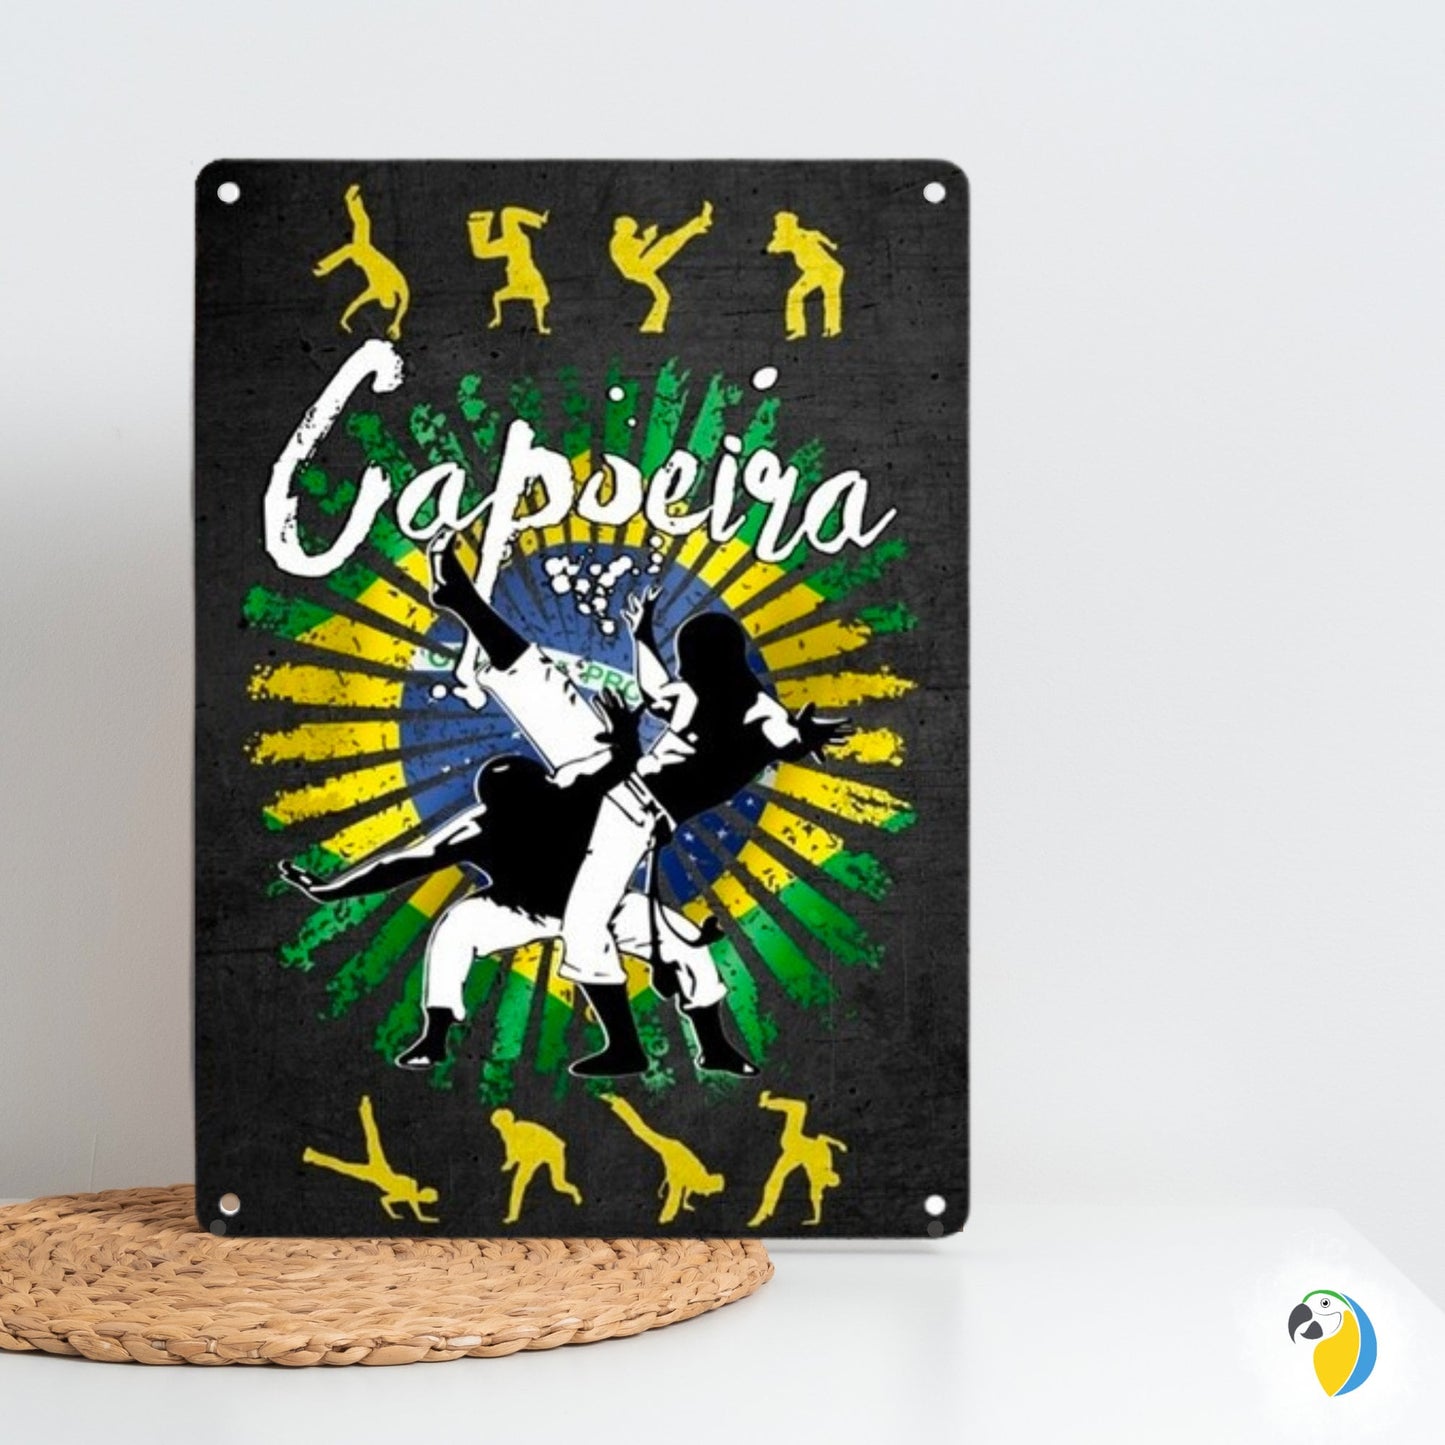 Brazil Capoeira Tin Sign | Afro Brazilian Fight Sport Dance Metal Print | Decorative Wall Hanging For Tropical Shabby Chic Decor | Papagaio Studio Etsy Shop